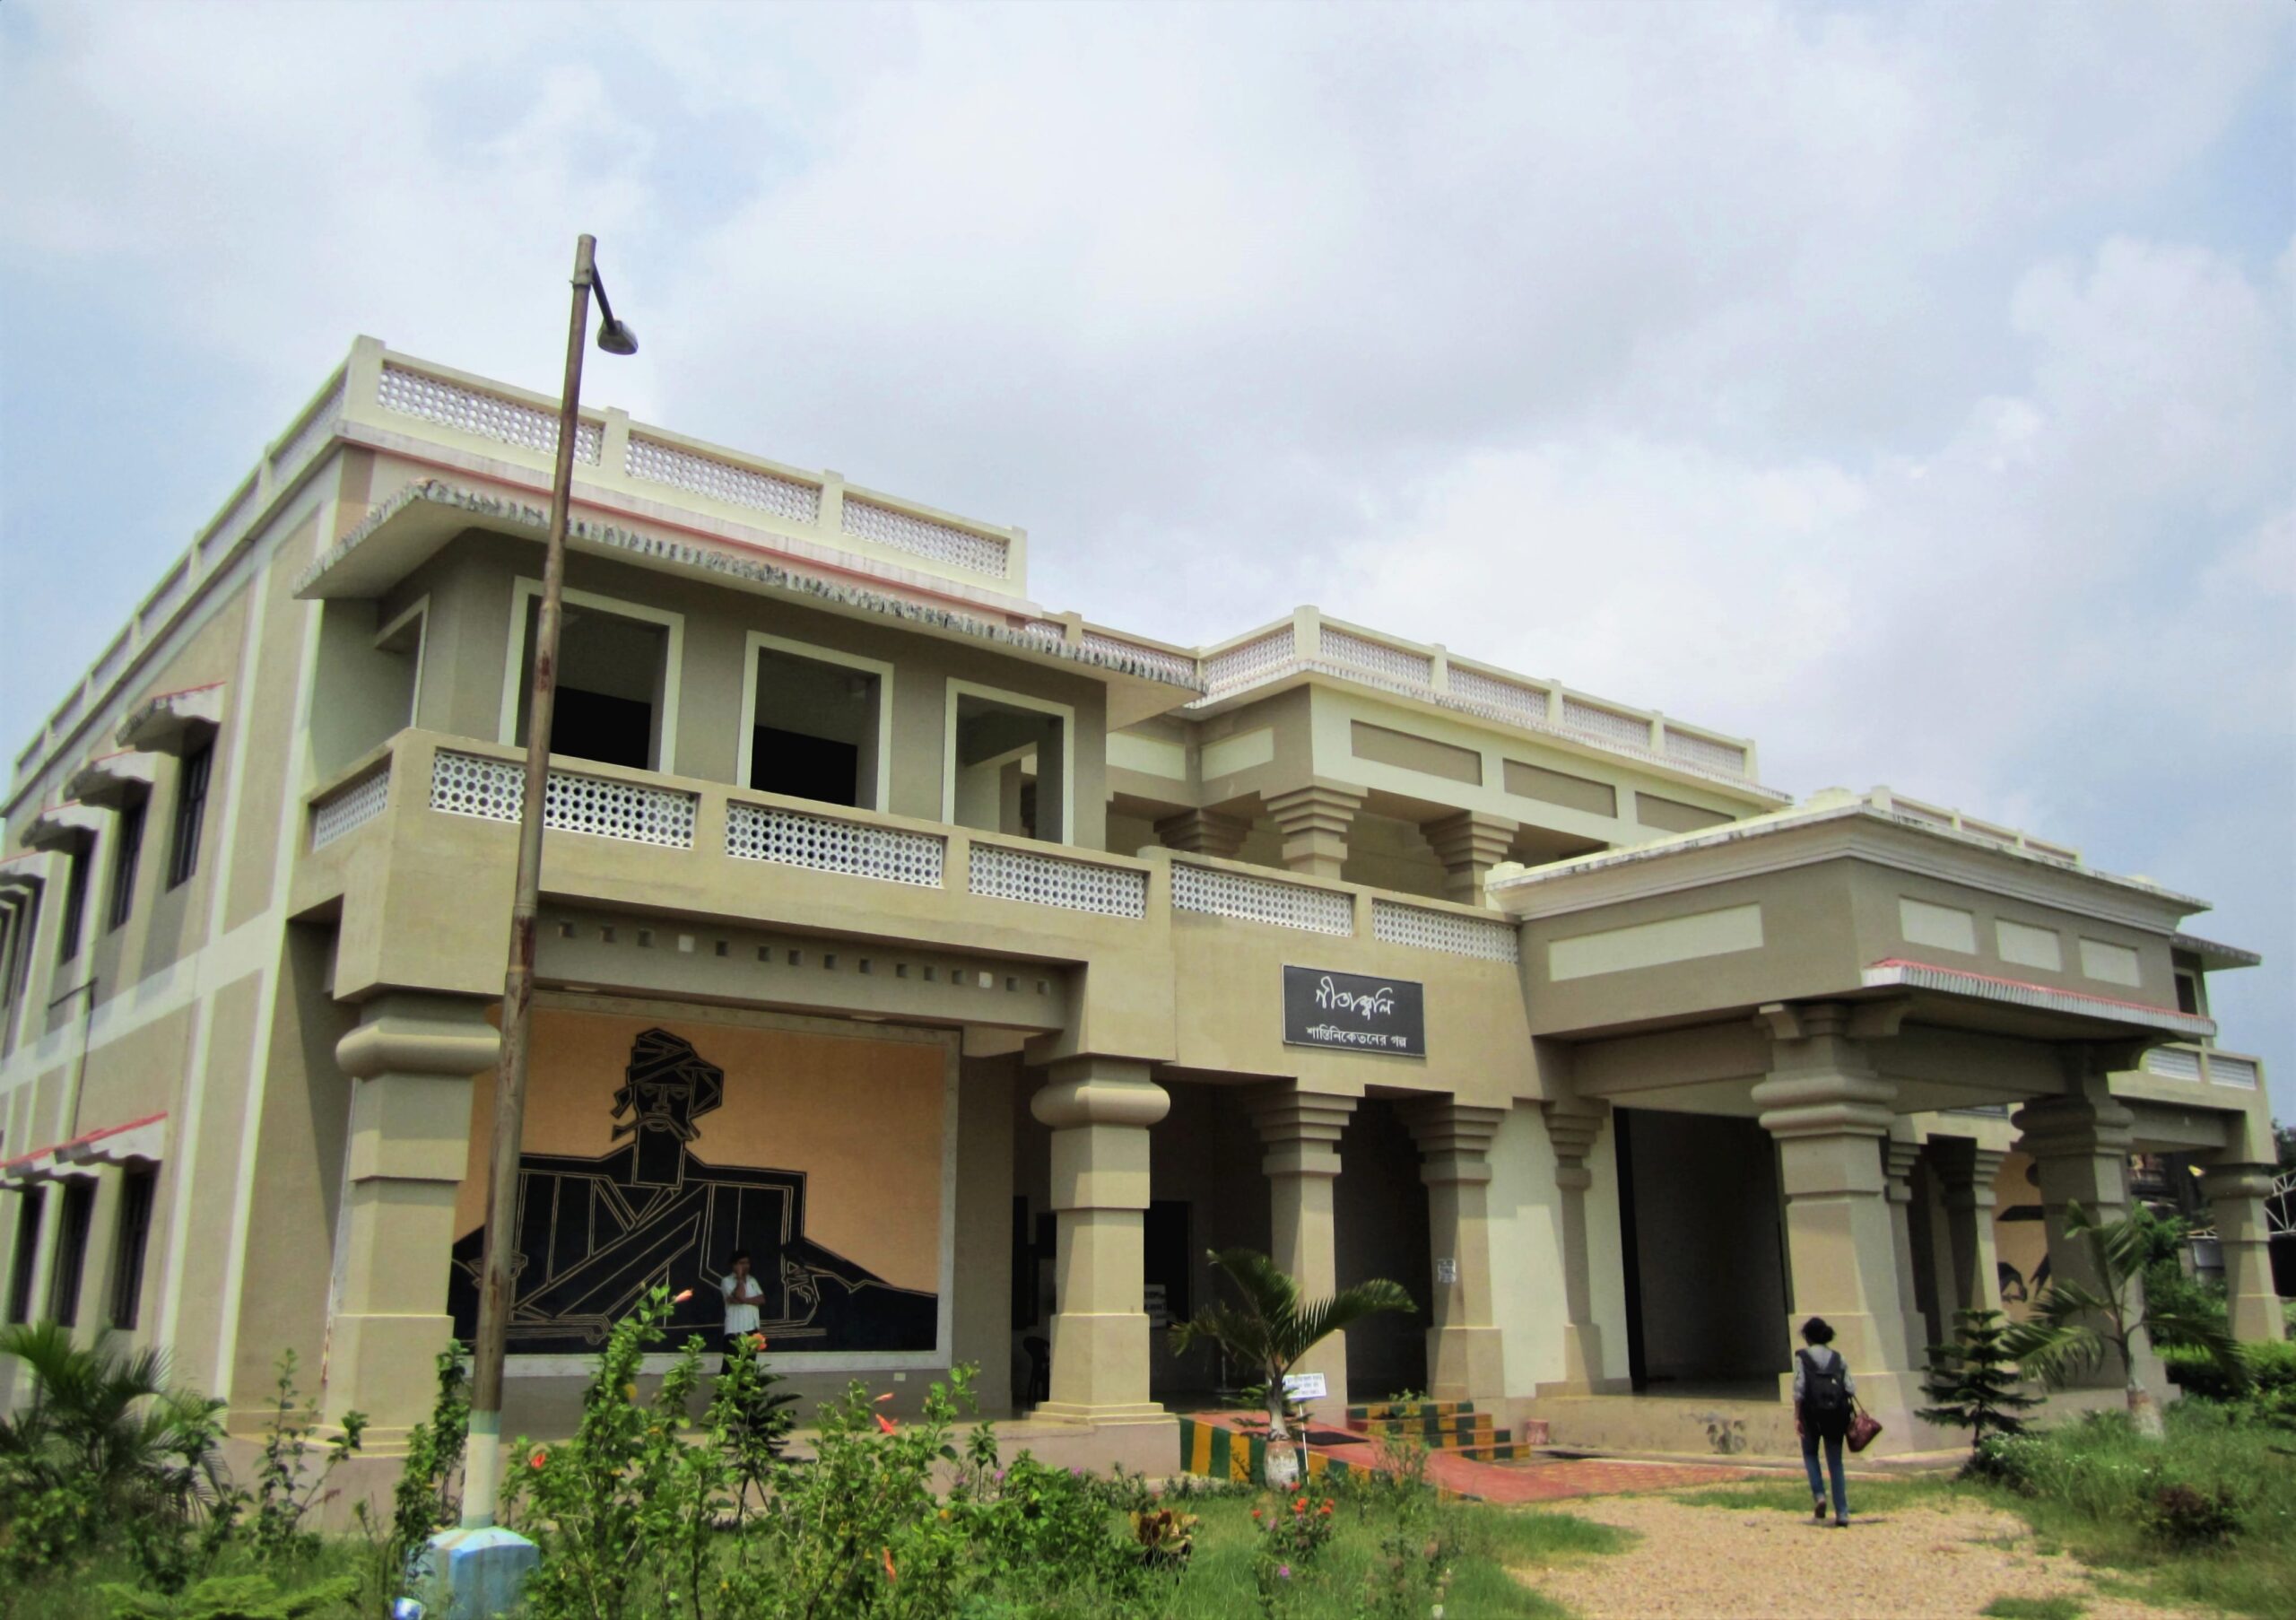 Geetanjali Museum